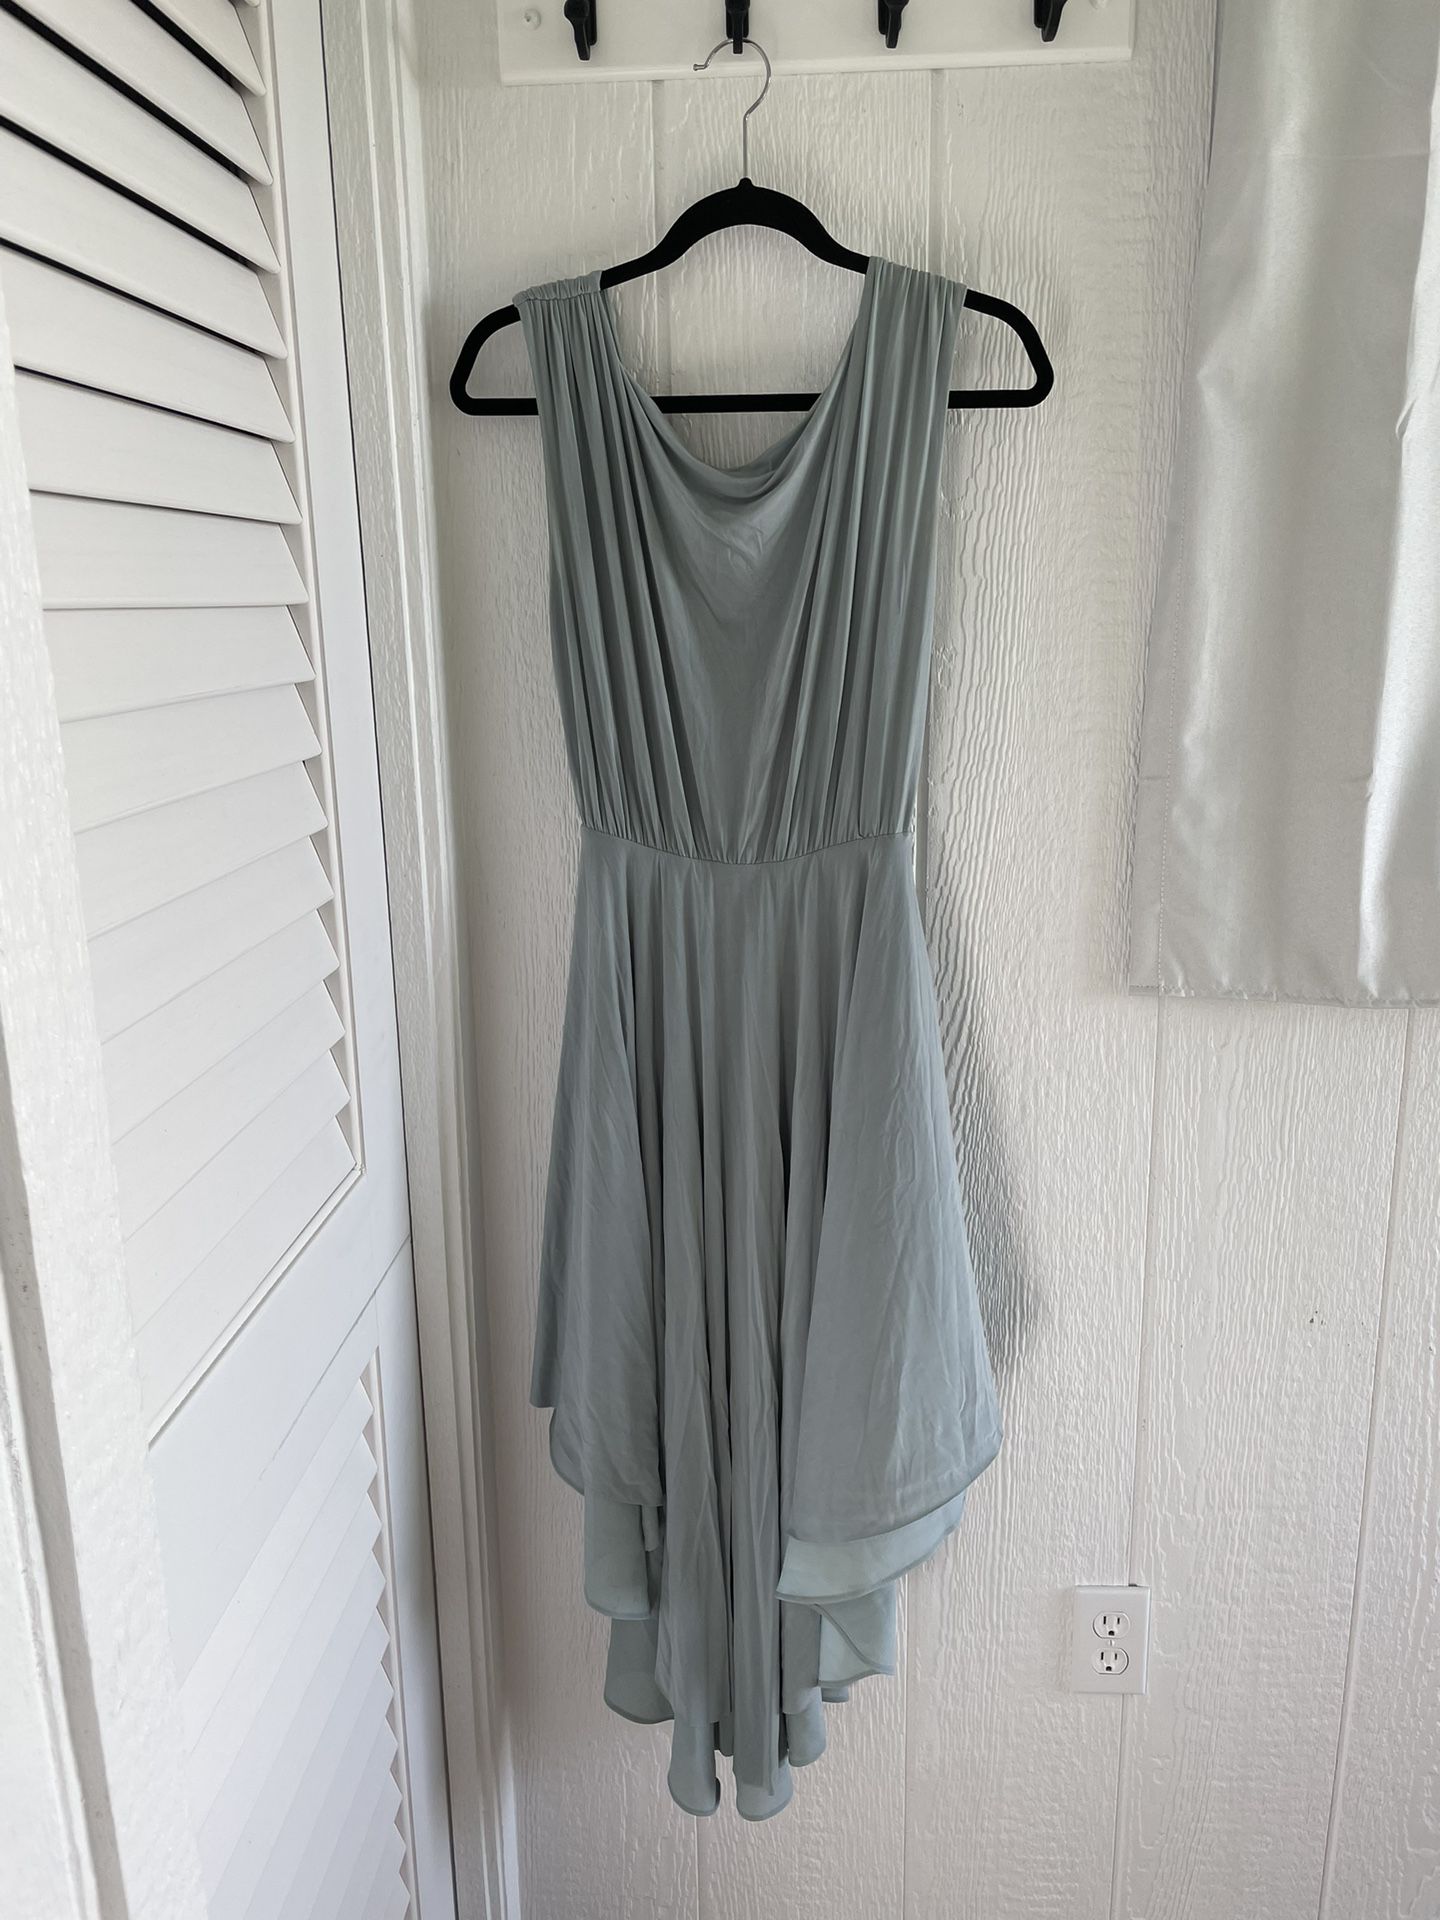 BHLDN Dress, Size US 2/UK 6/ EU 34